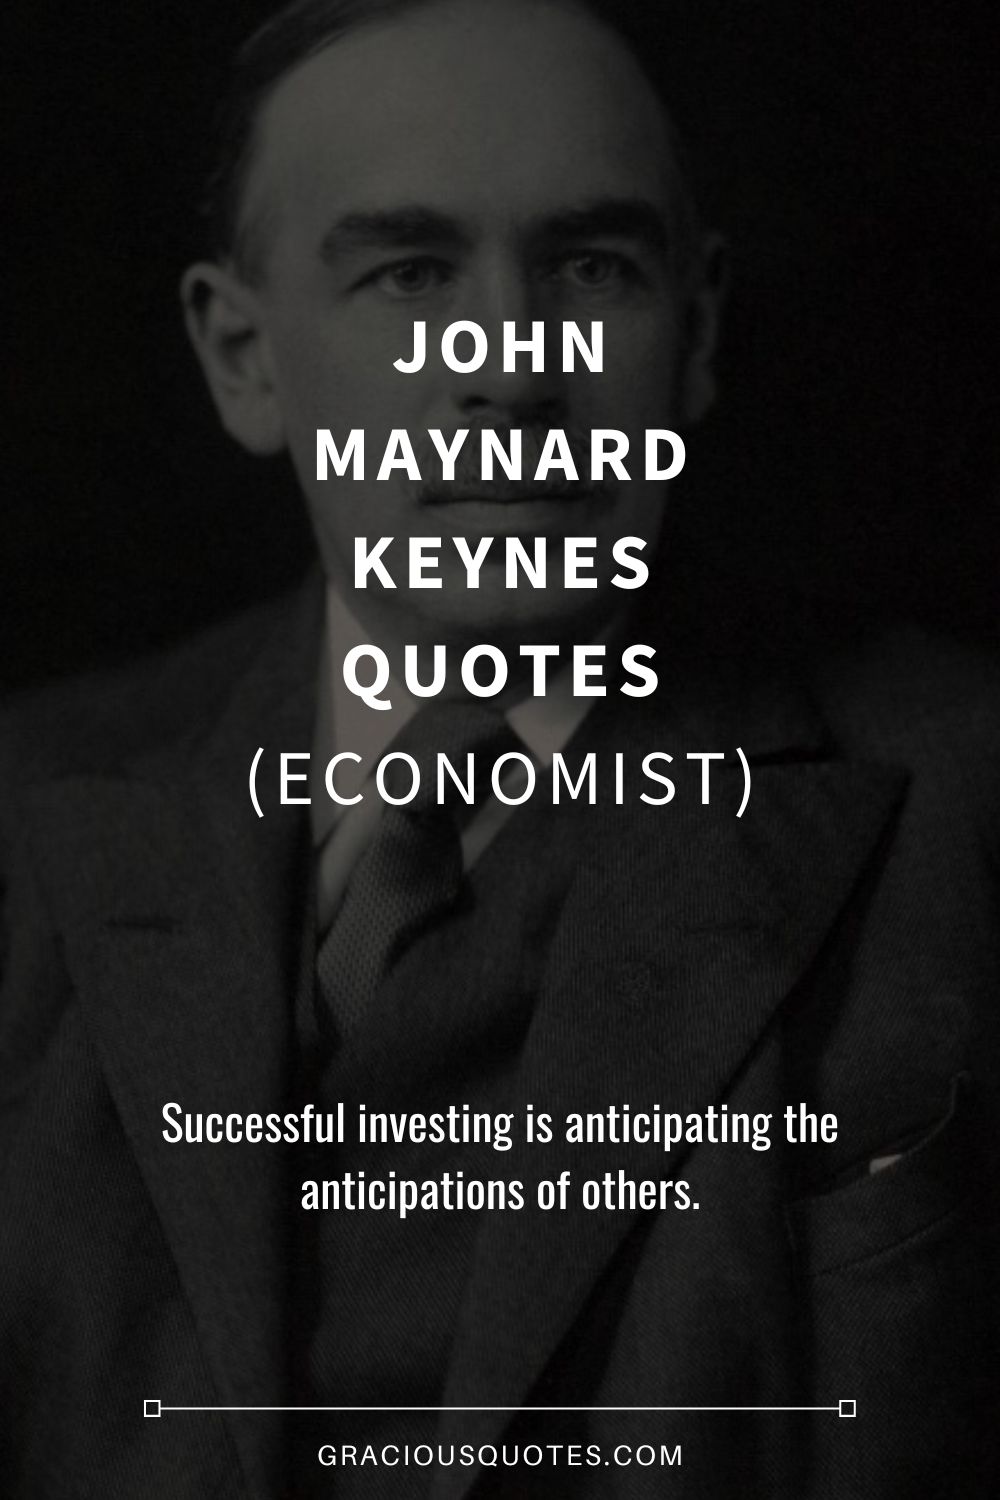 John Maynard Keynes Quotes (ECONOMIST) - Gracious Quotes